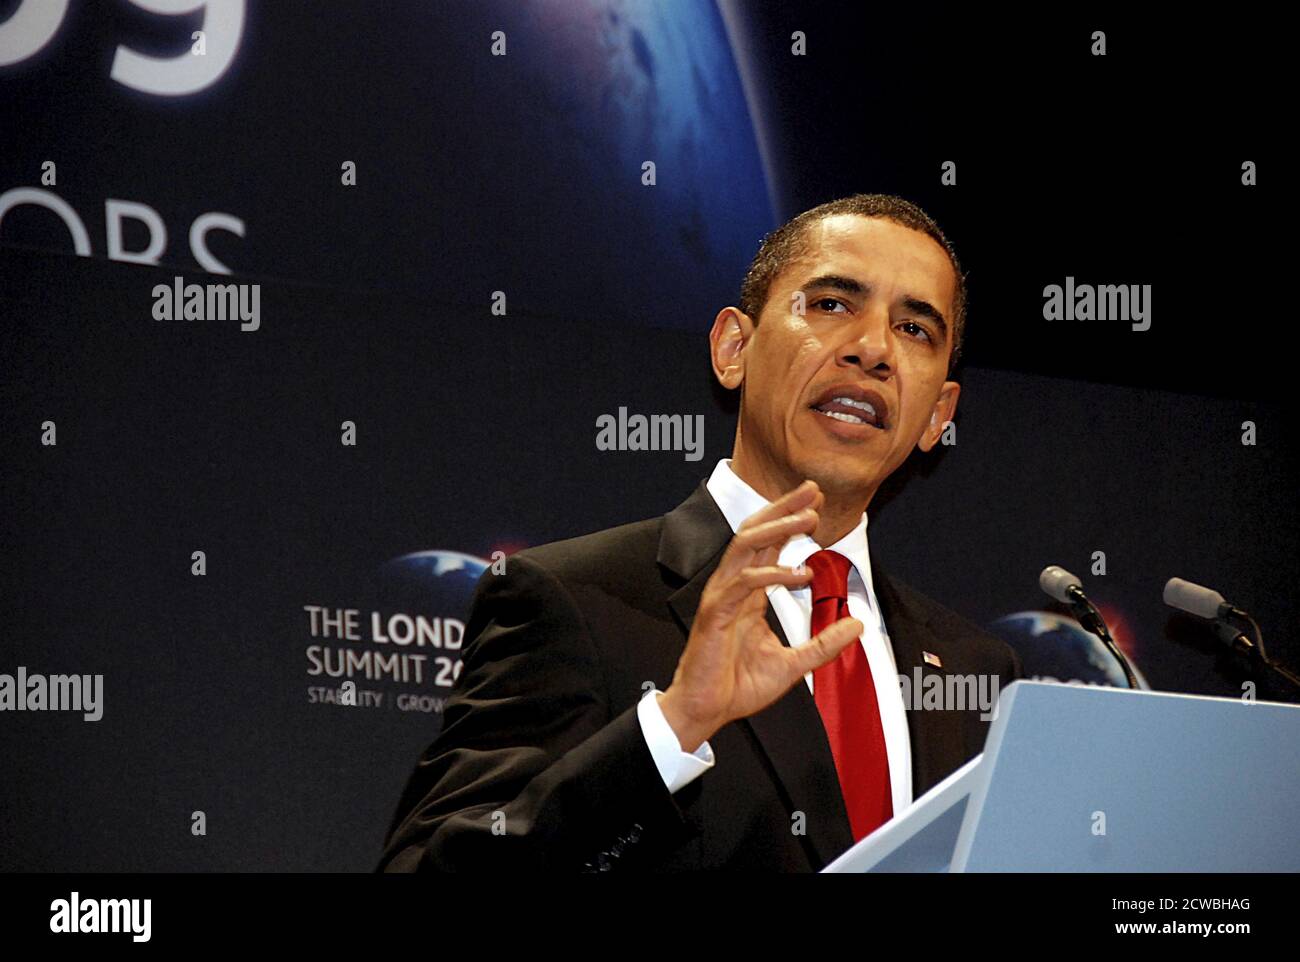 K3140-44th President of the United States Barack Obama UNSIGNED photo 